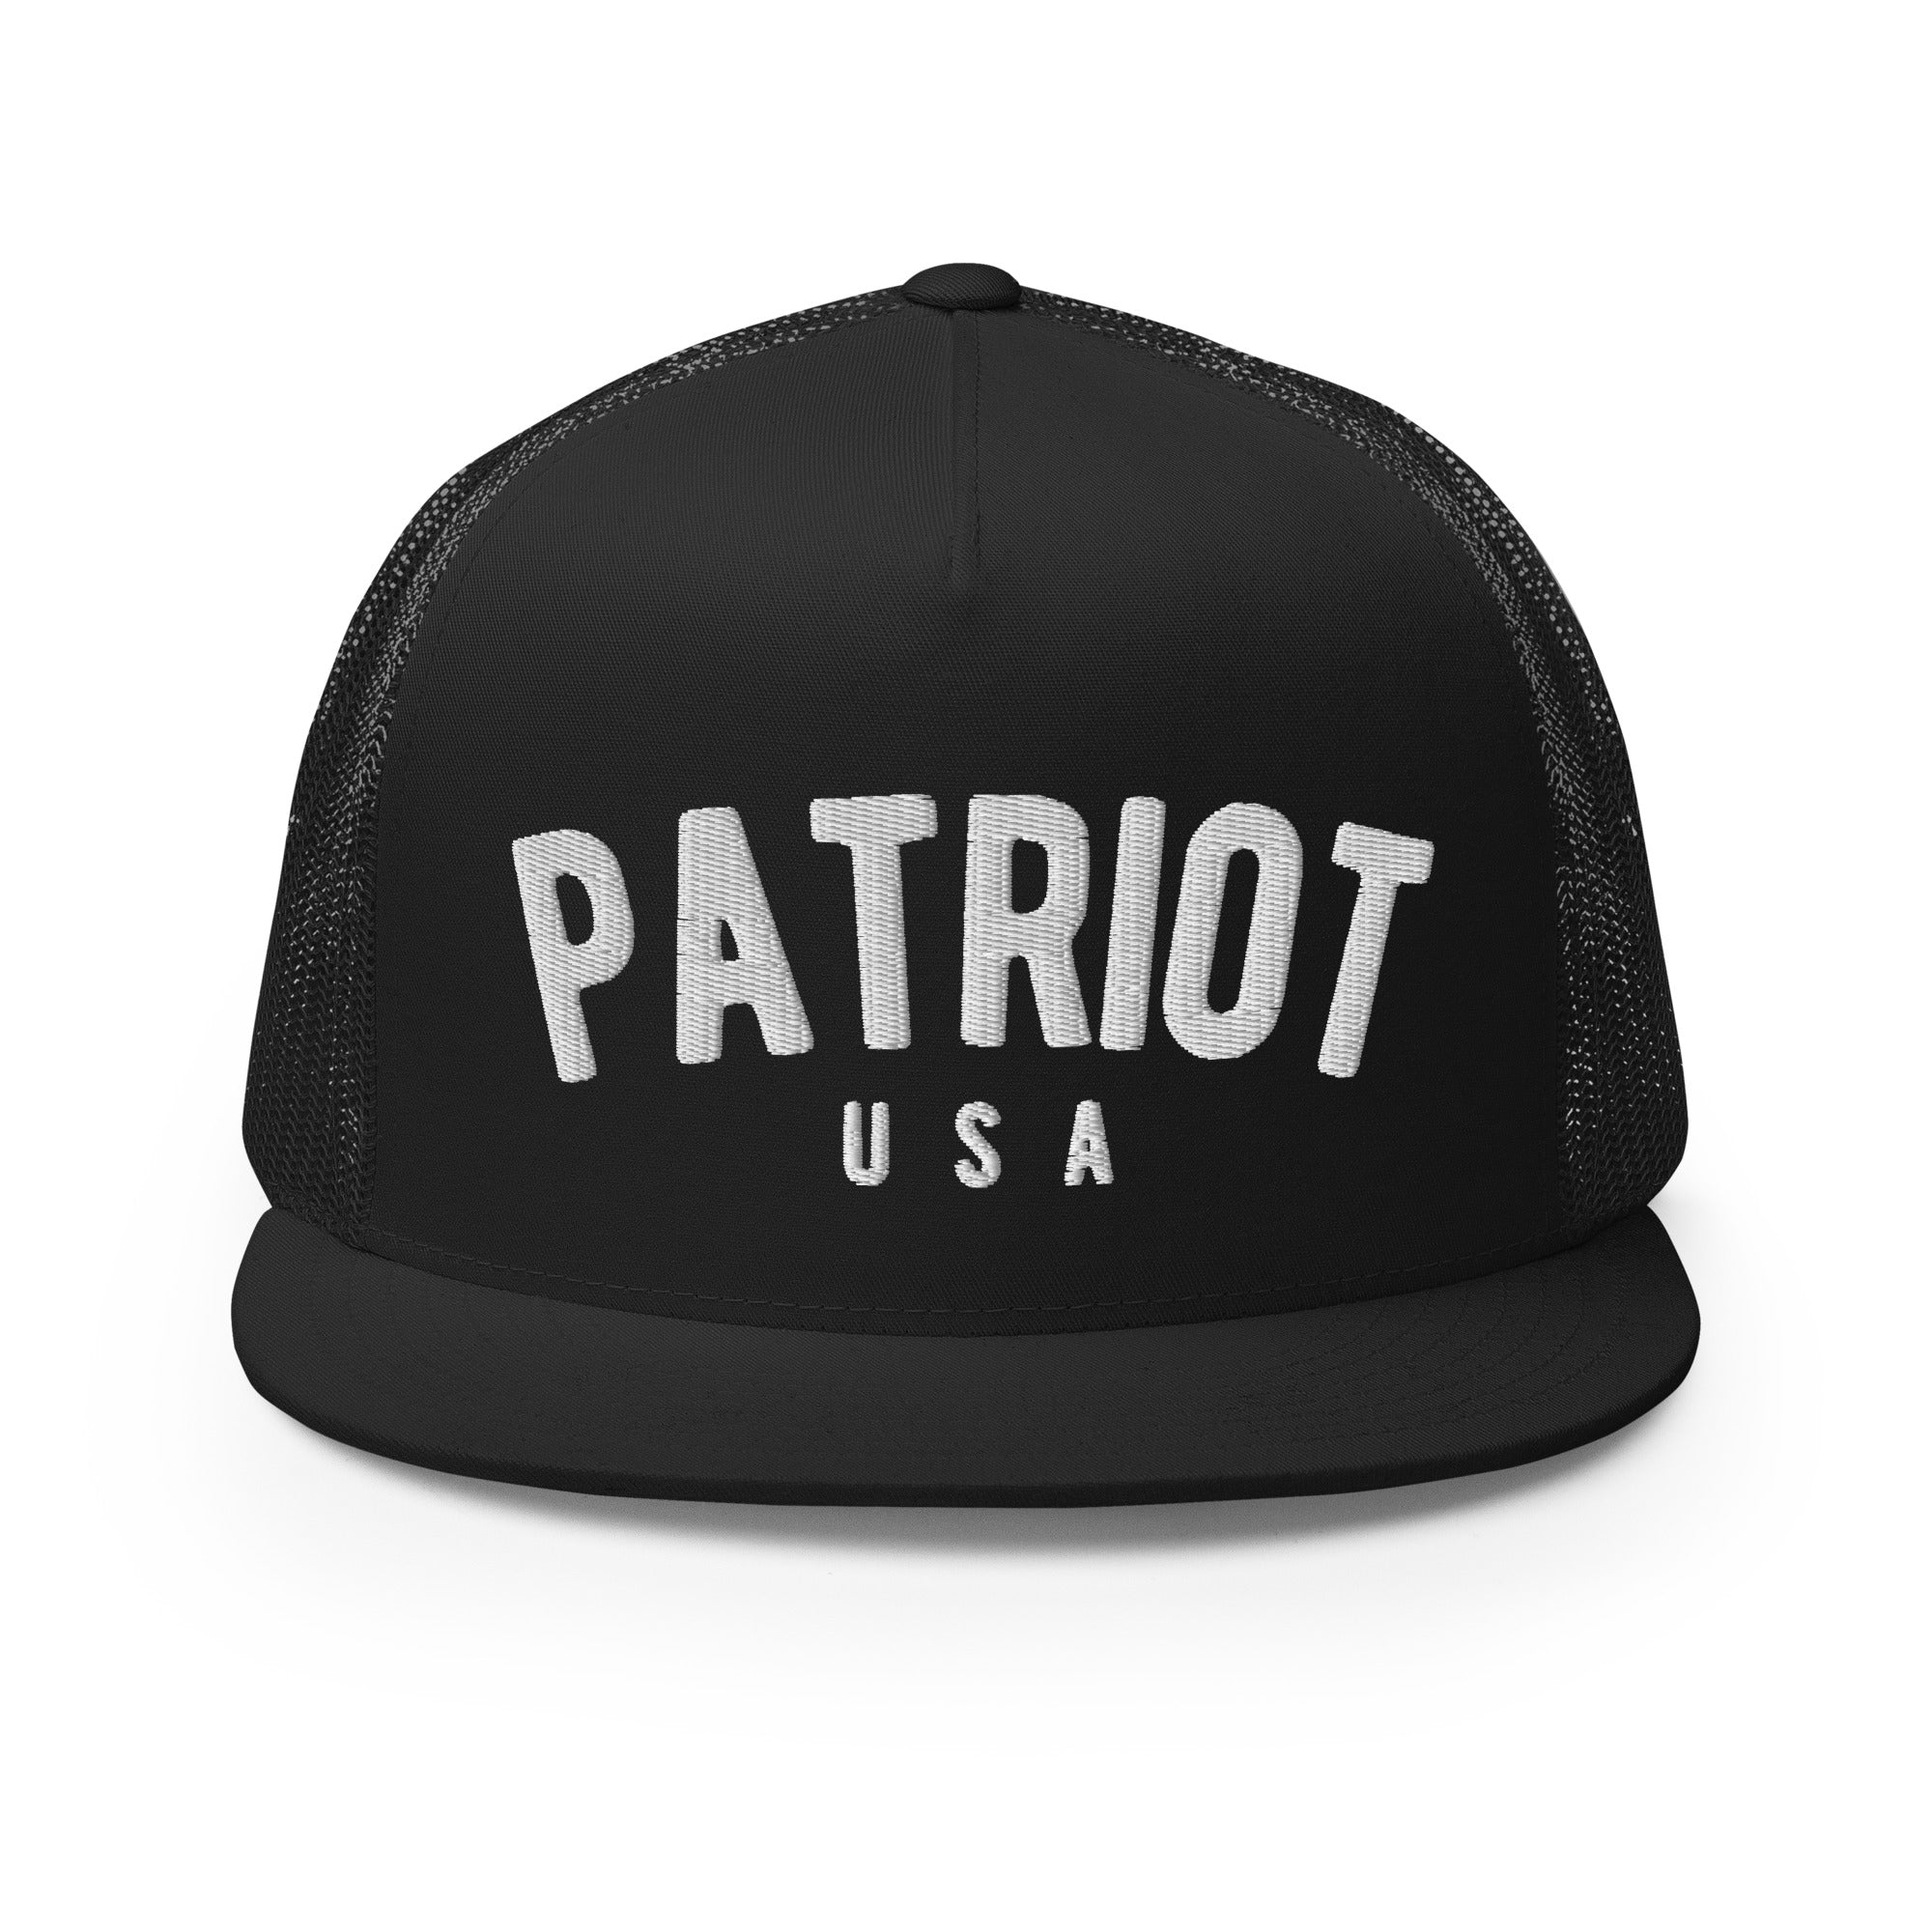 Patriot - Flat Bill Trucker Hat